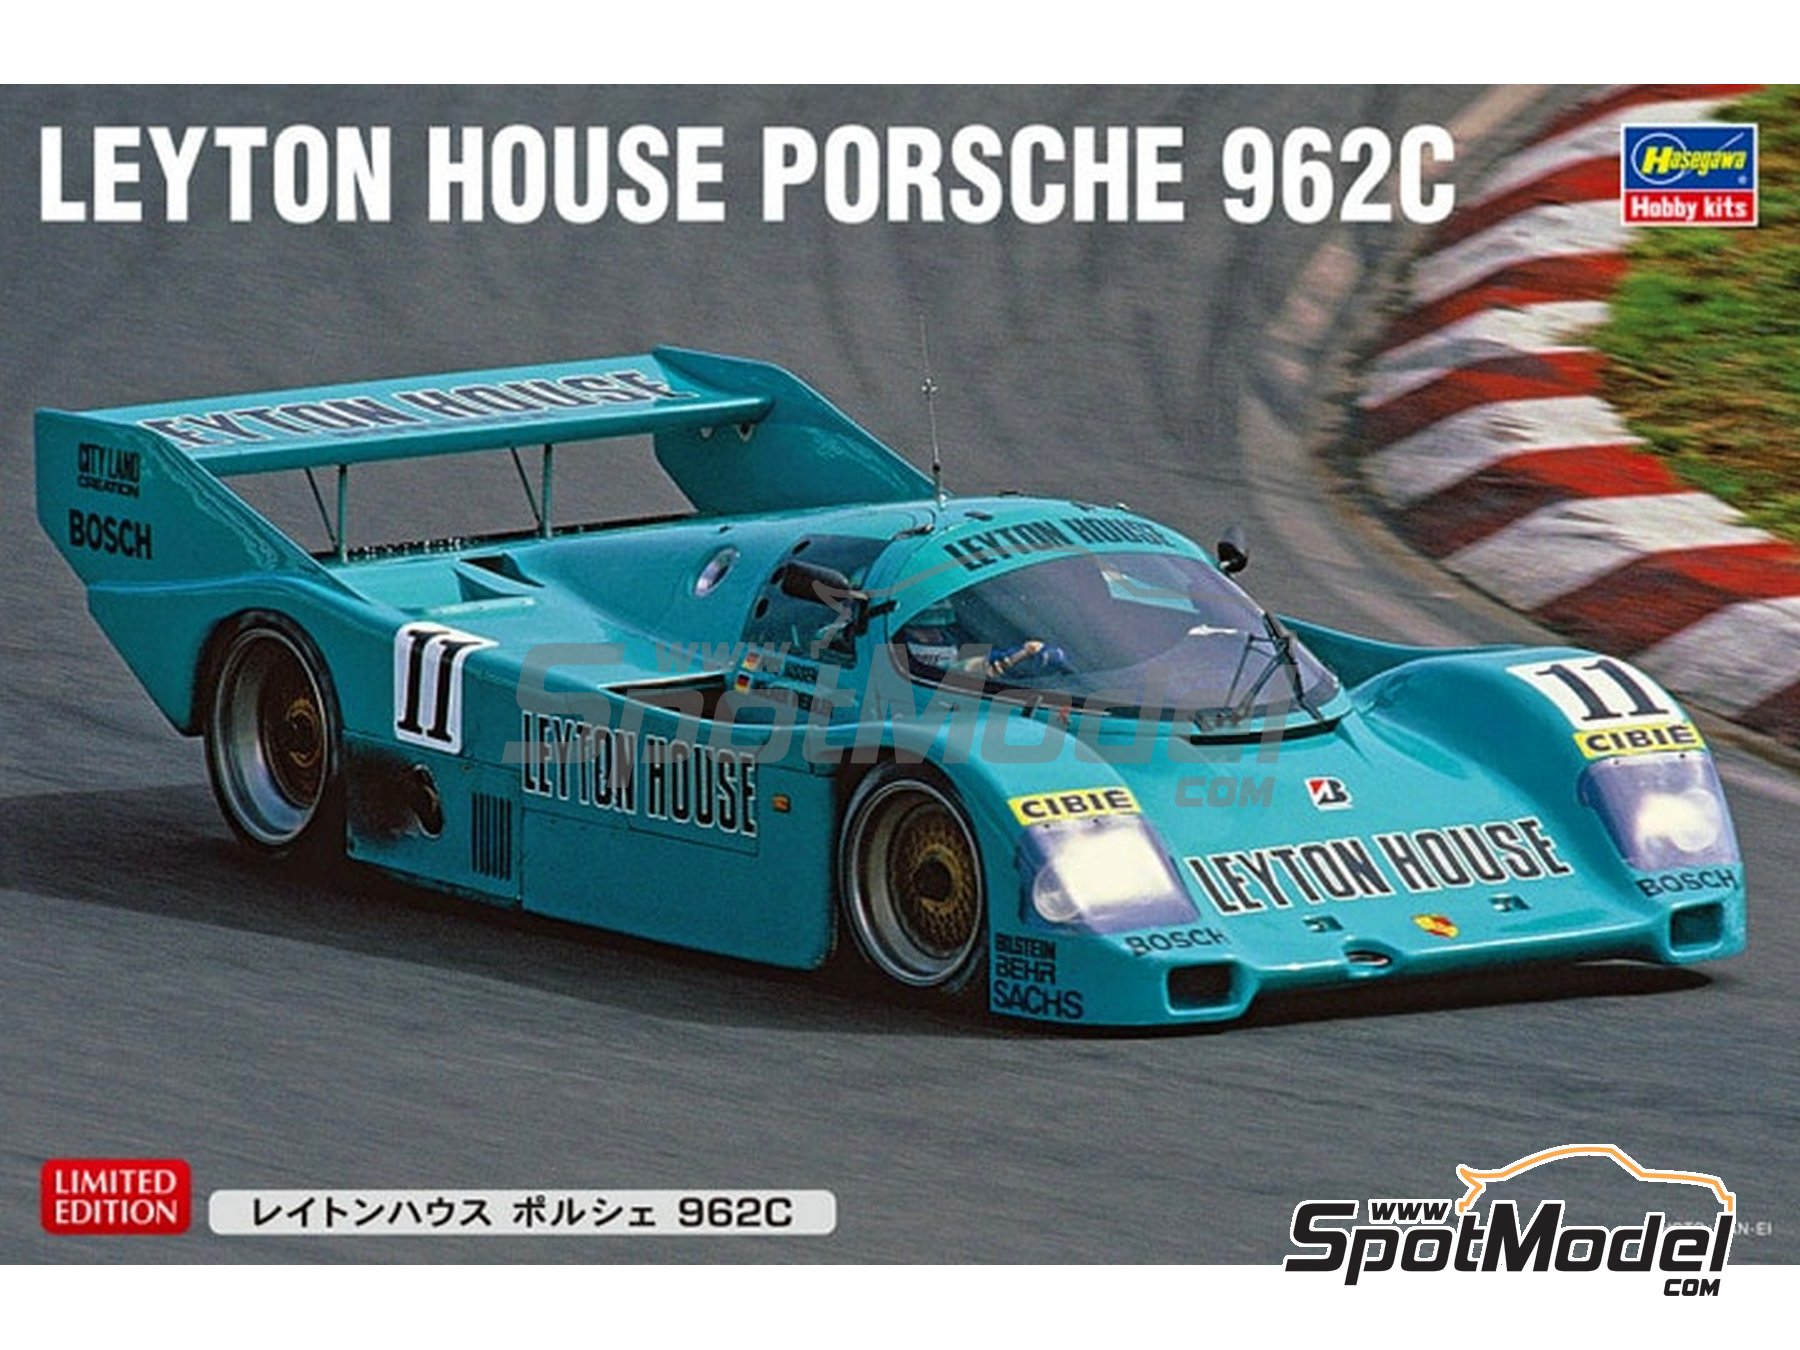 Hasegawa 20287 Kenwood Kremer Porsche 962c 1/24 Scale Kit for sale online 